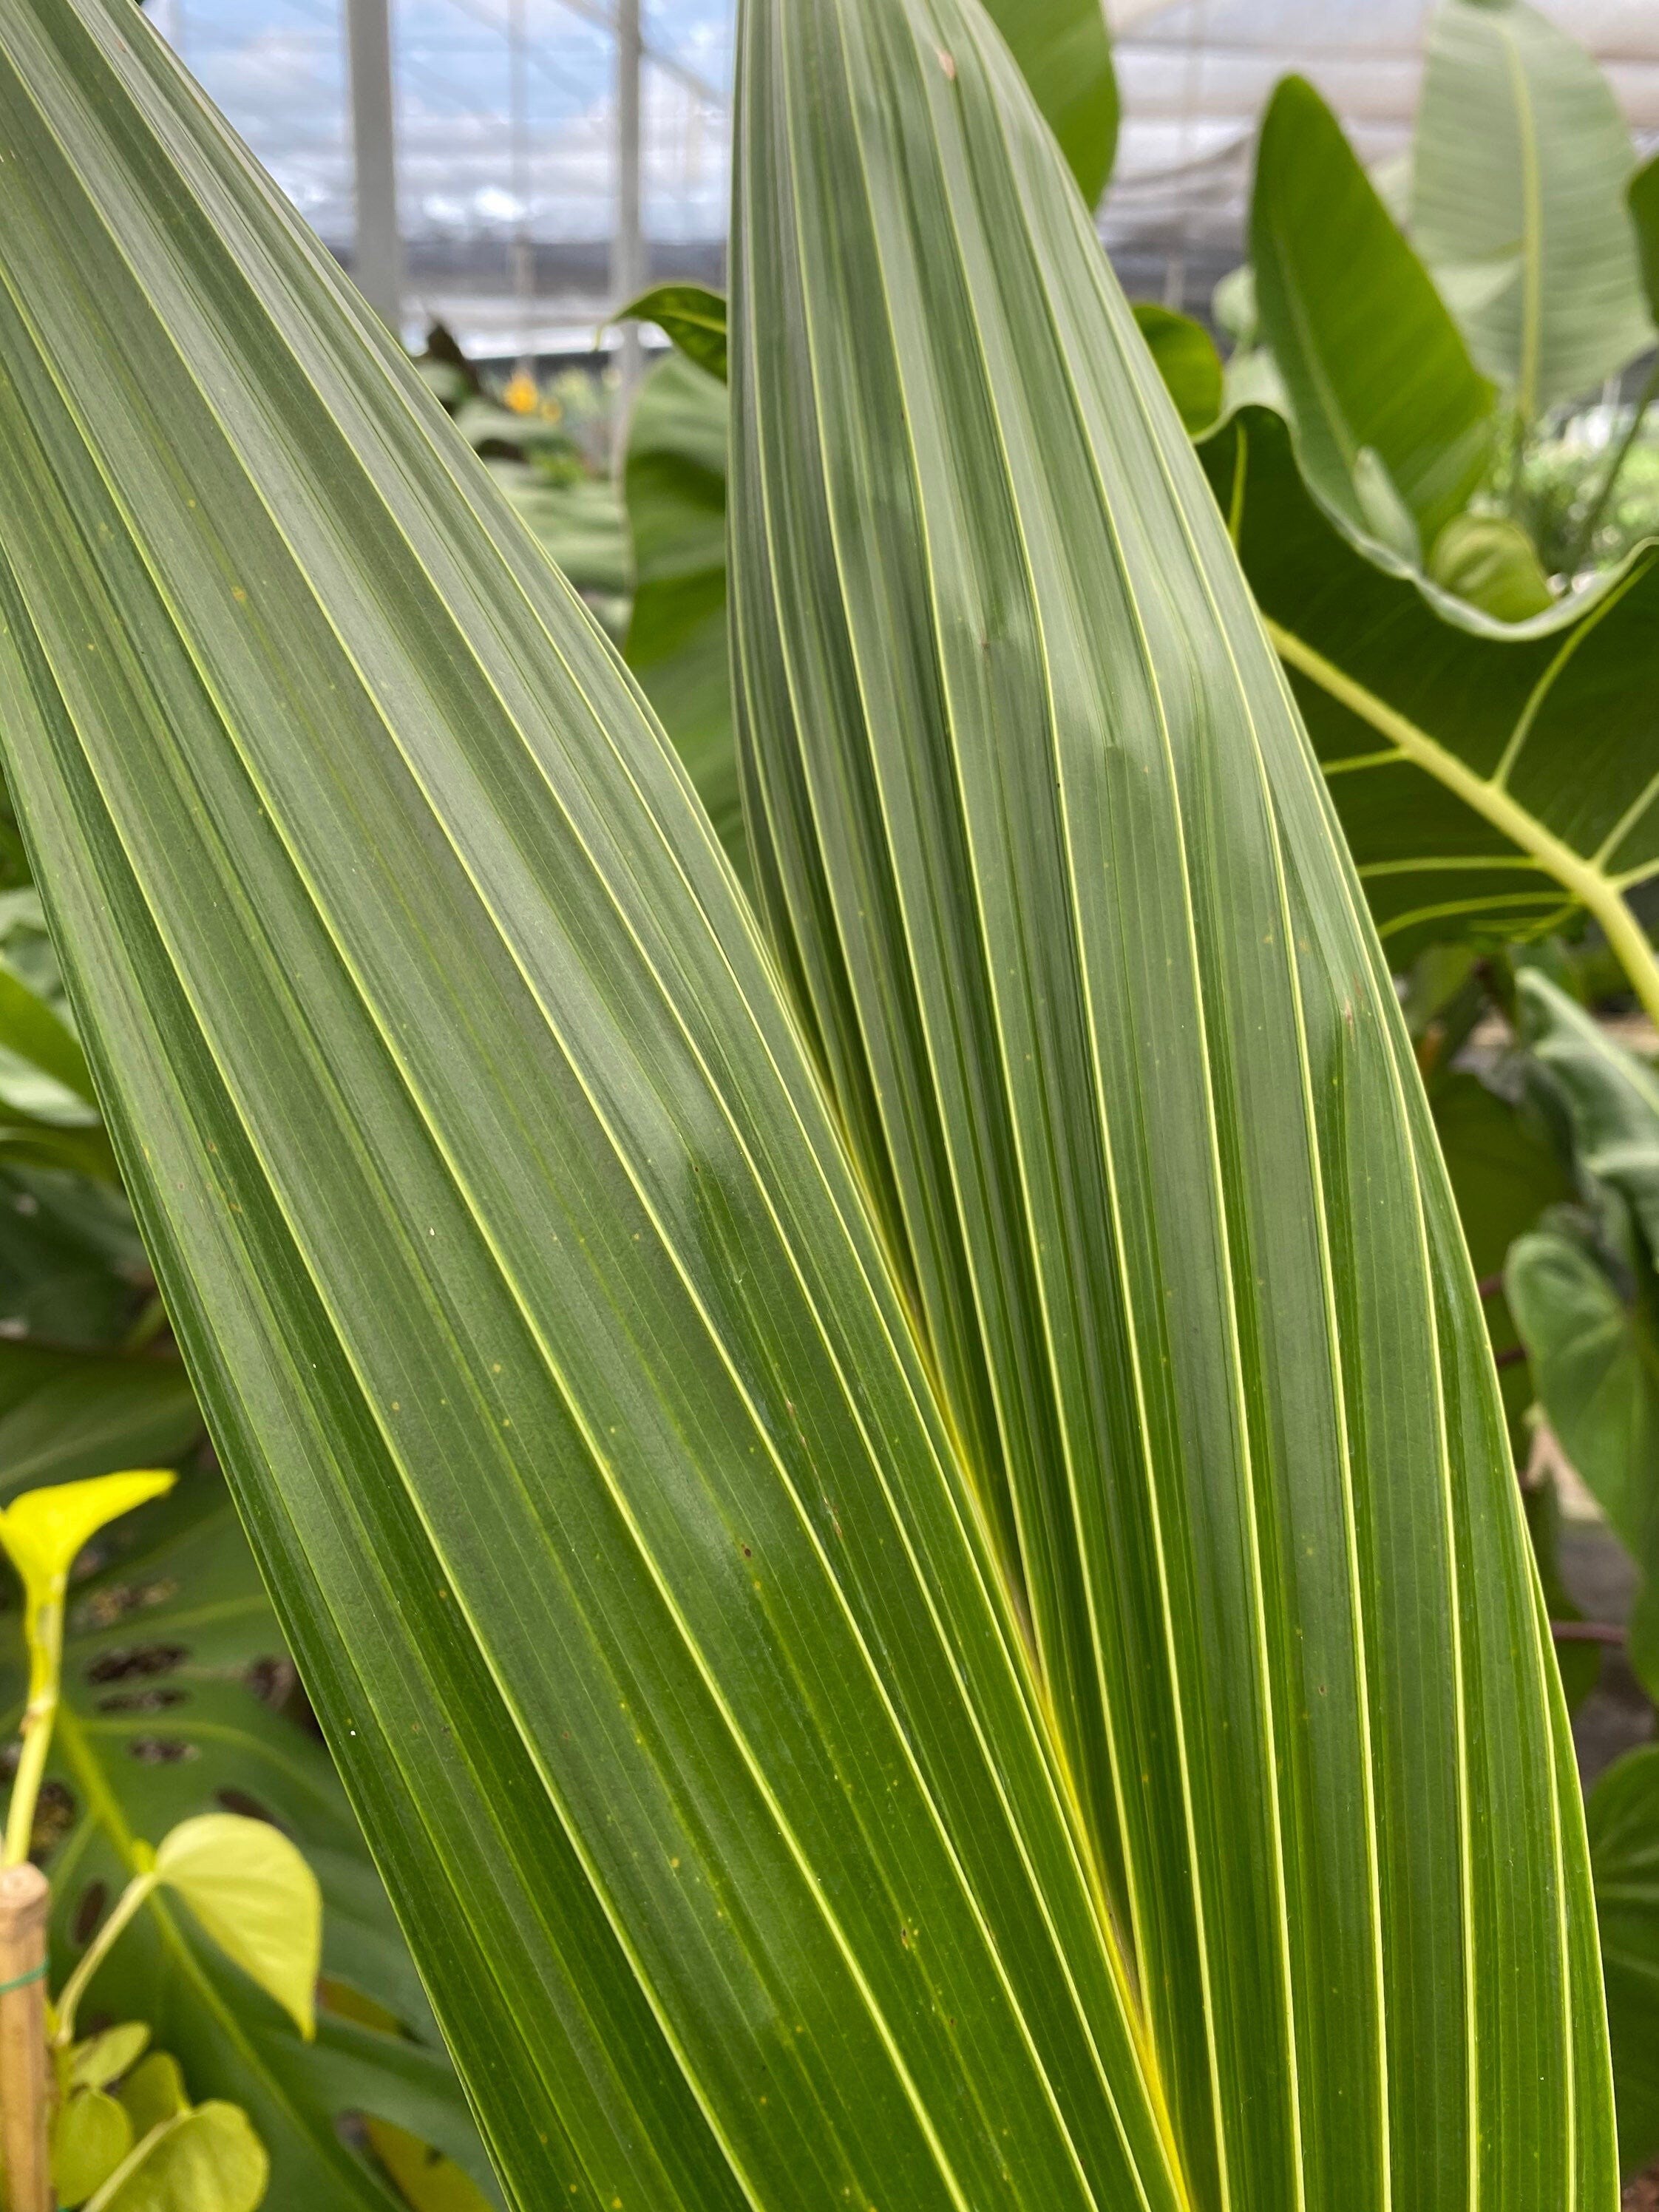 Coconut Palm Tree, Green Malayan Cocos nucifera